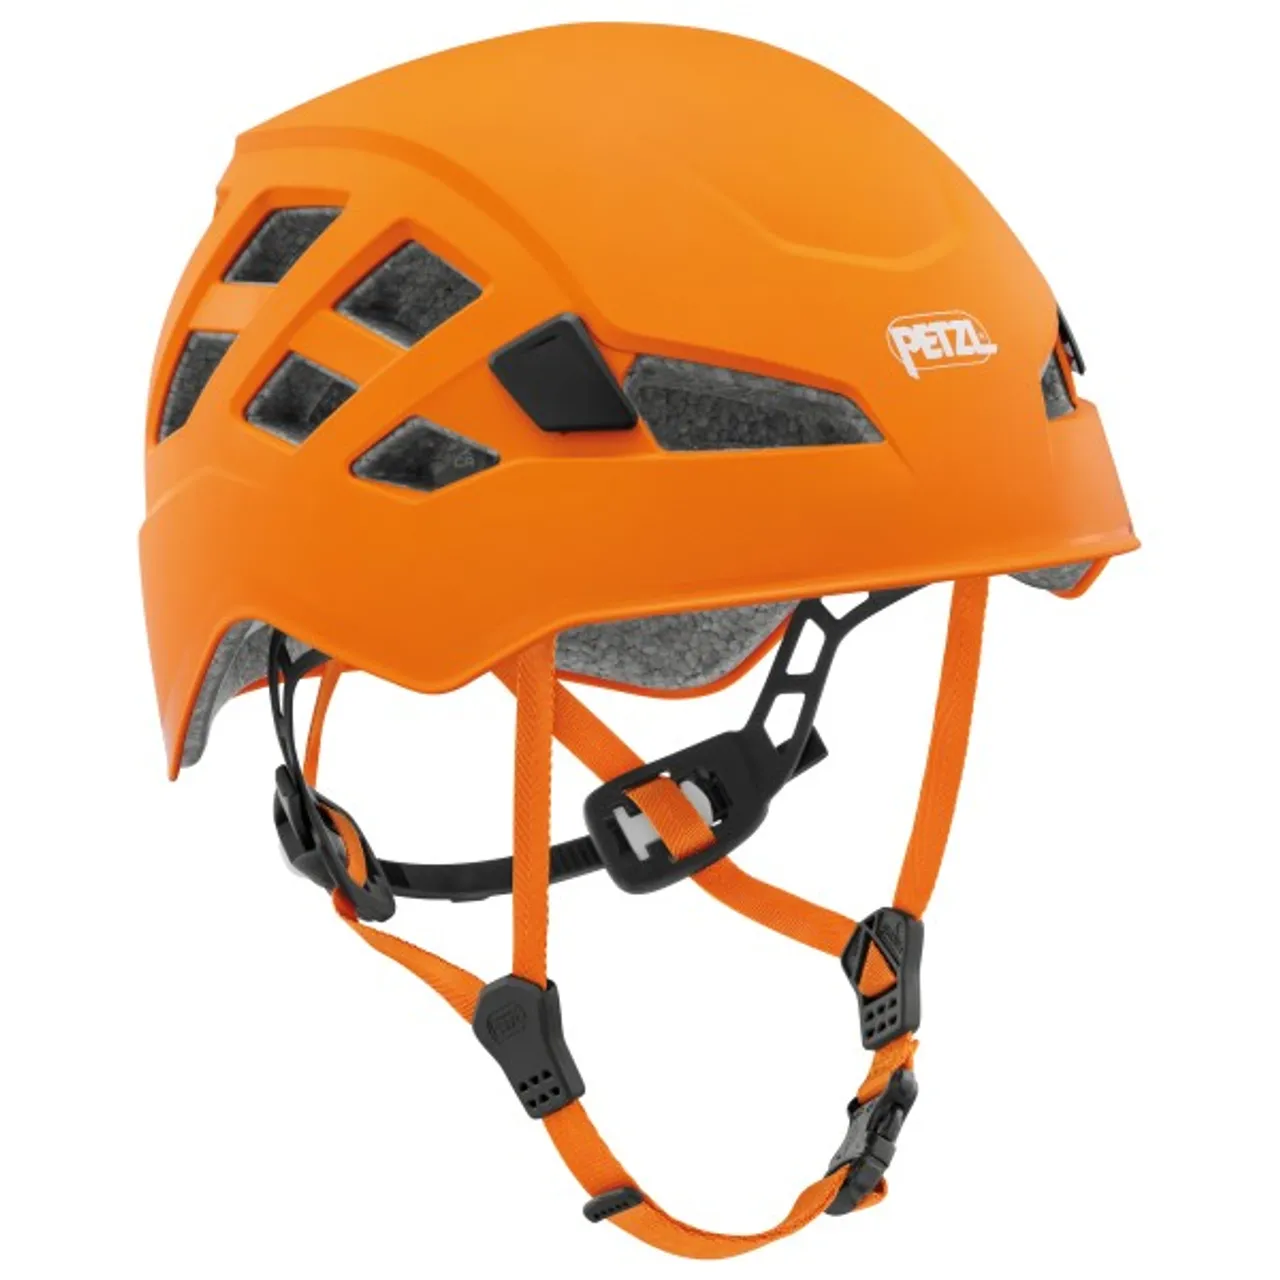 Petzl - Boreo - Climbing helmet size S/M, orange